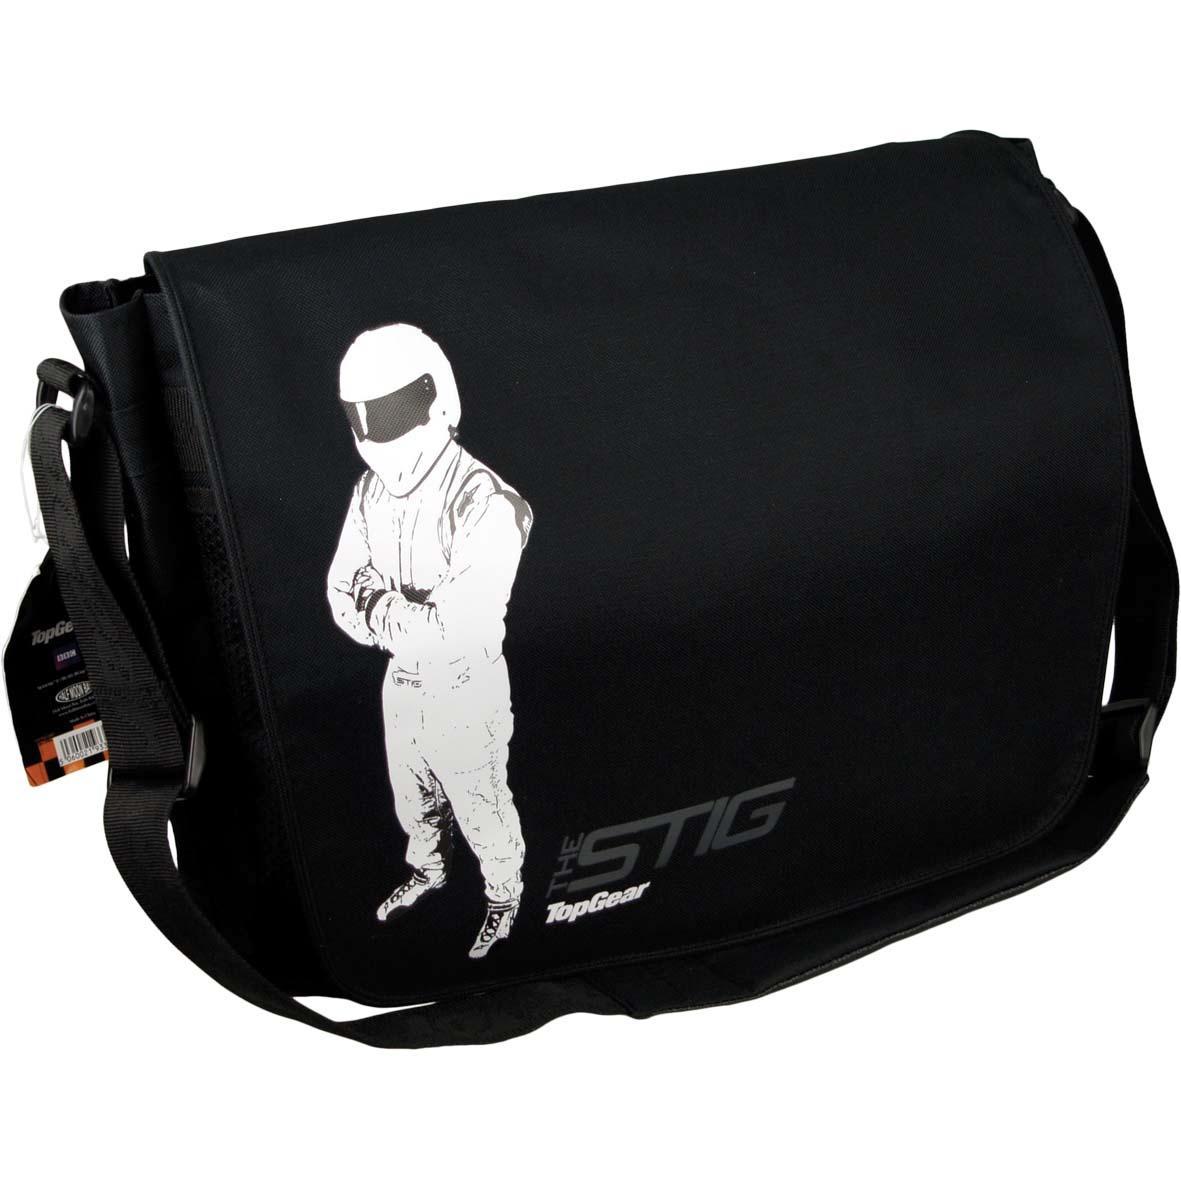 Foto Top Gear 'The Stig' Canvas Shoulder Bag - Black